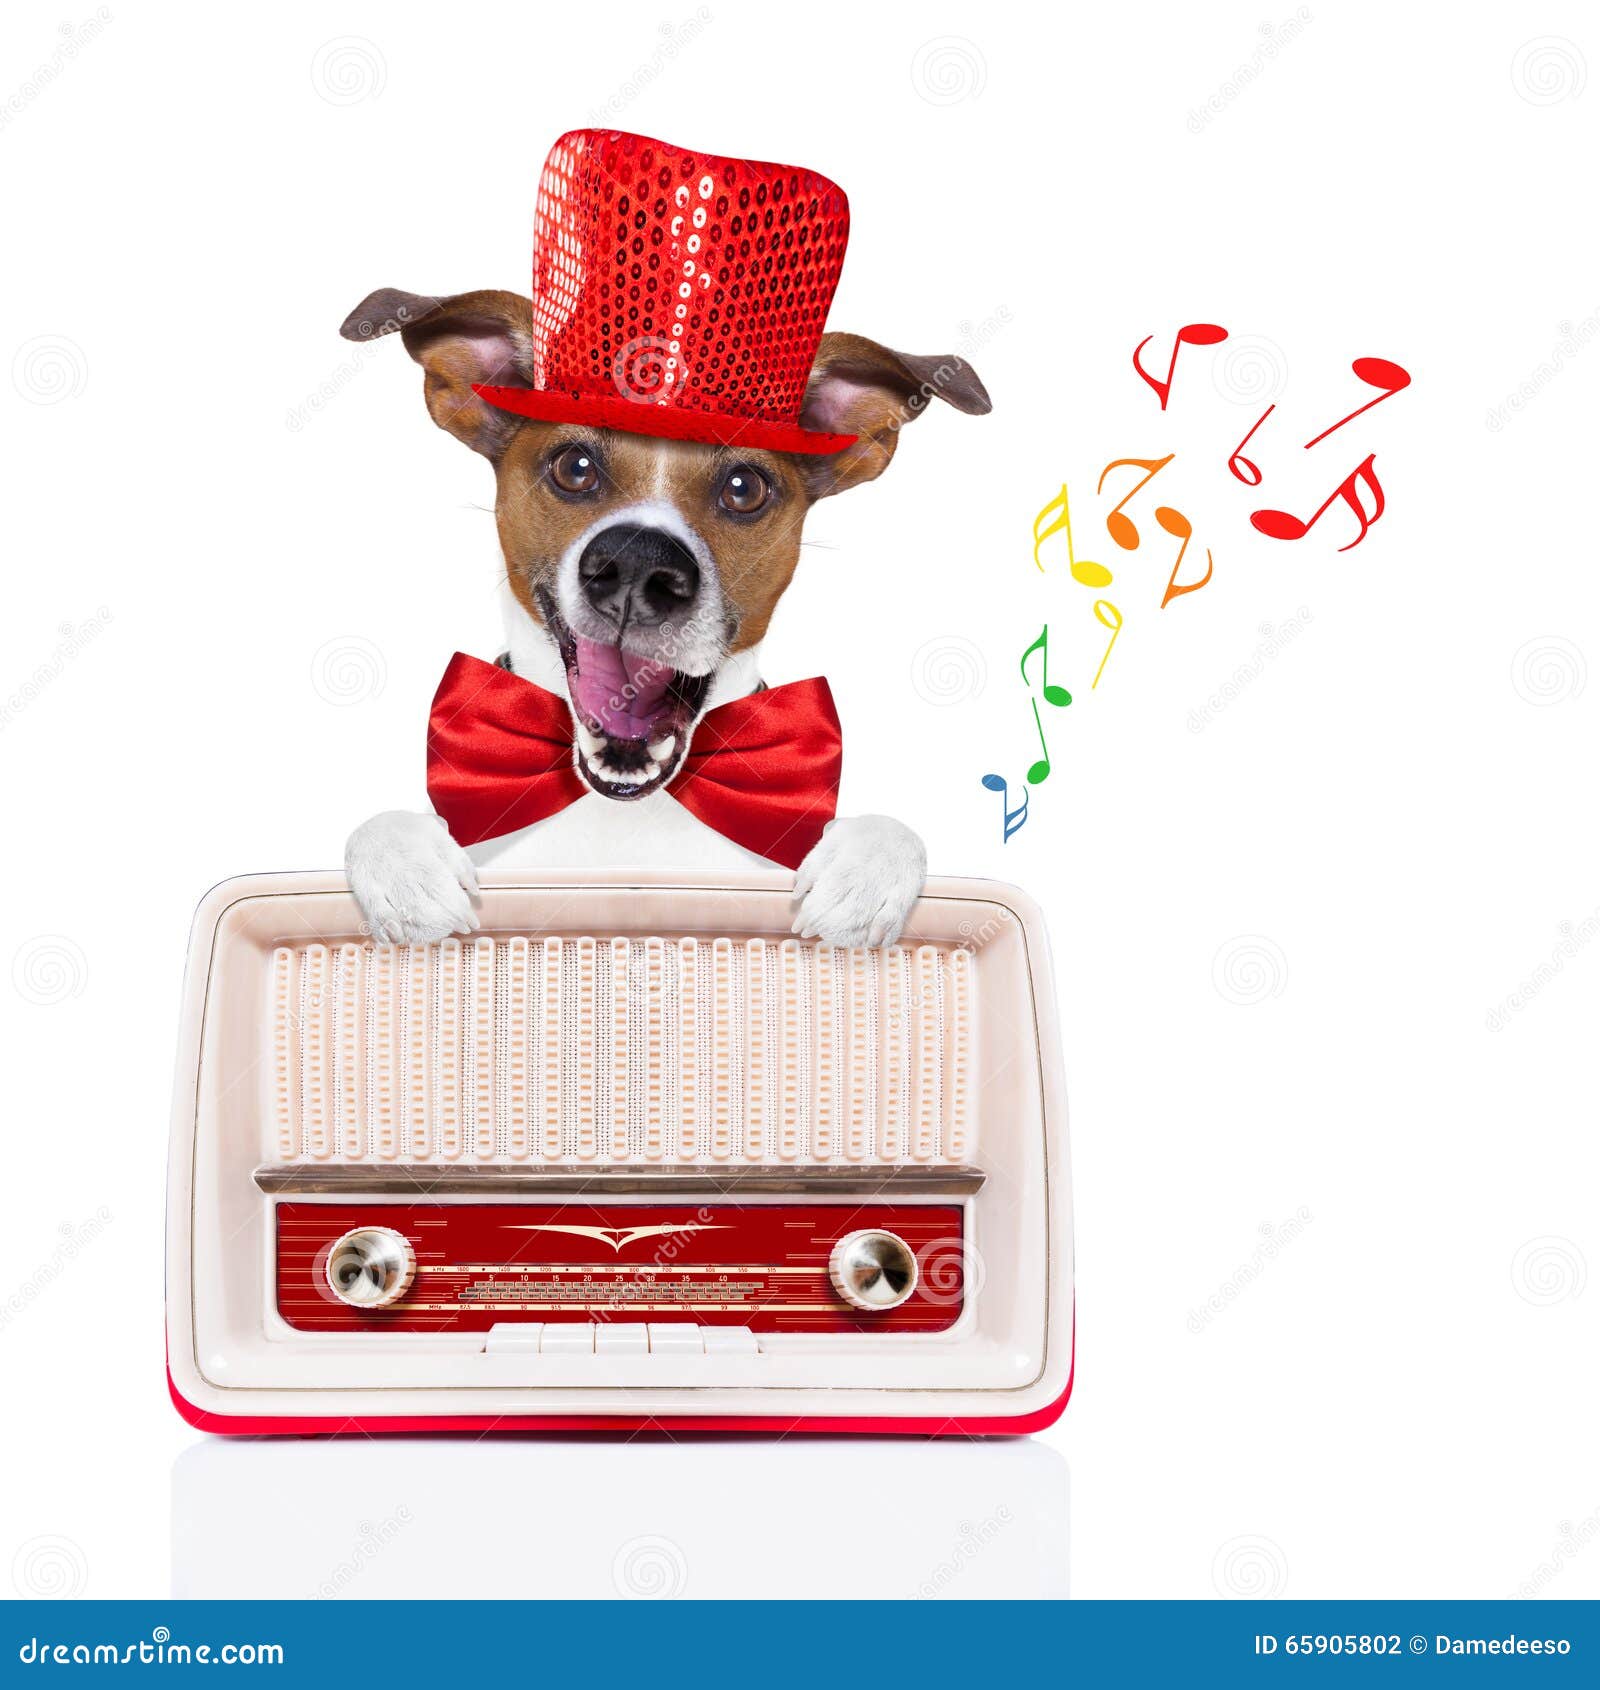 Включи радио для собак. Собака и радио. Собачье радио. Щенок радио. Собака слушает радио.